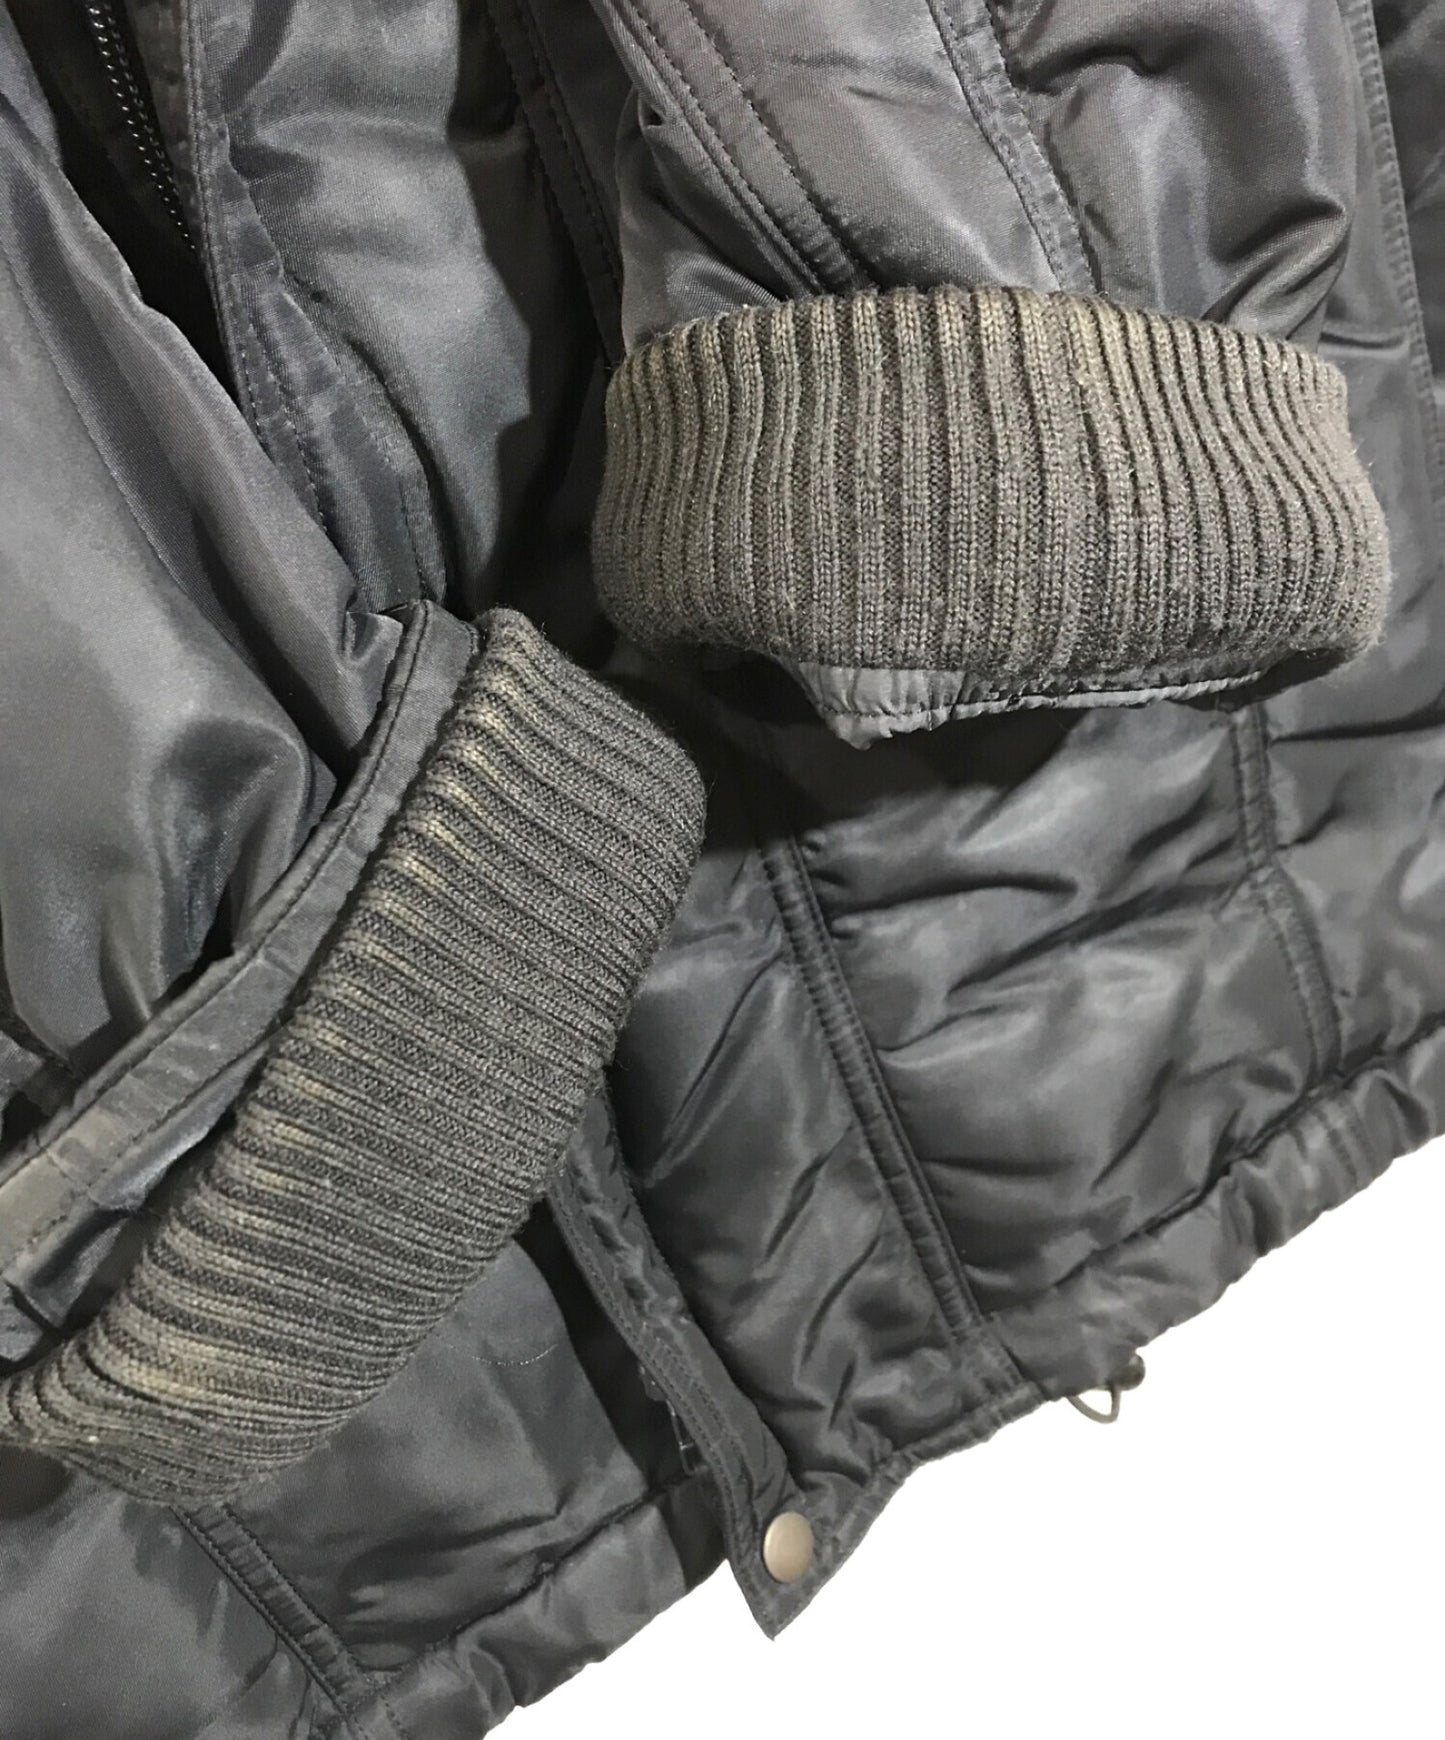 [Pre-owned] ISSEY MIYAKE MEN Tech nylon jacket ME13FD083